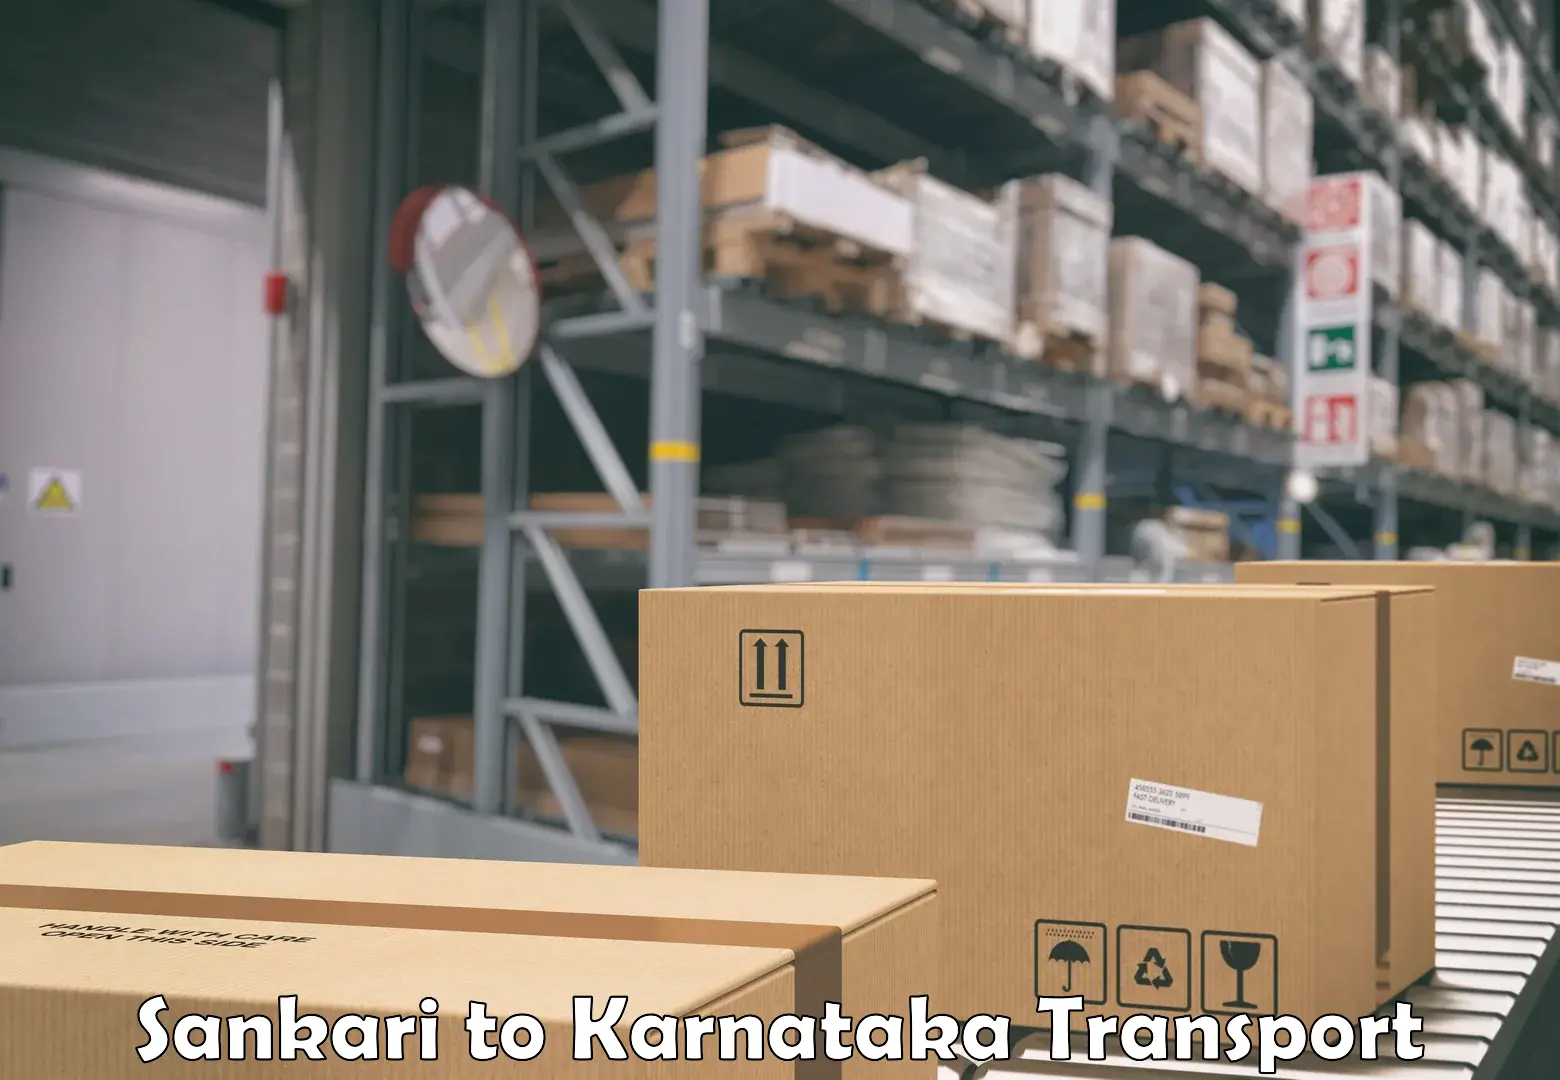 Transport bike from one state to another Sankari to Karnataka